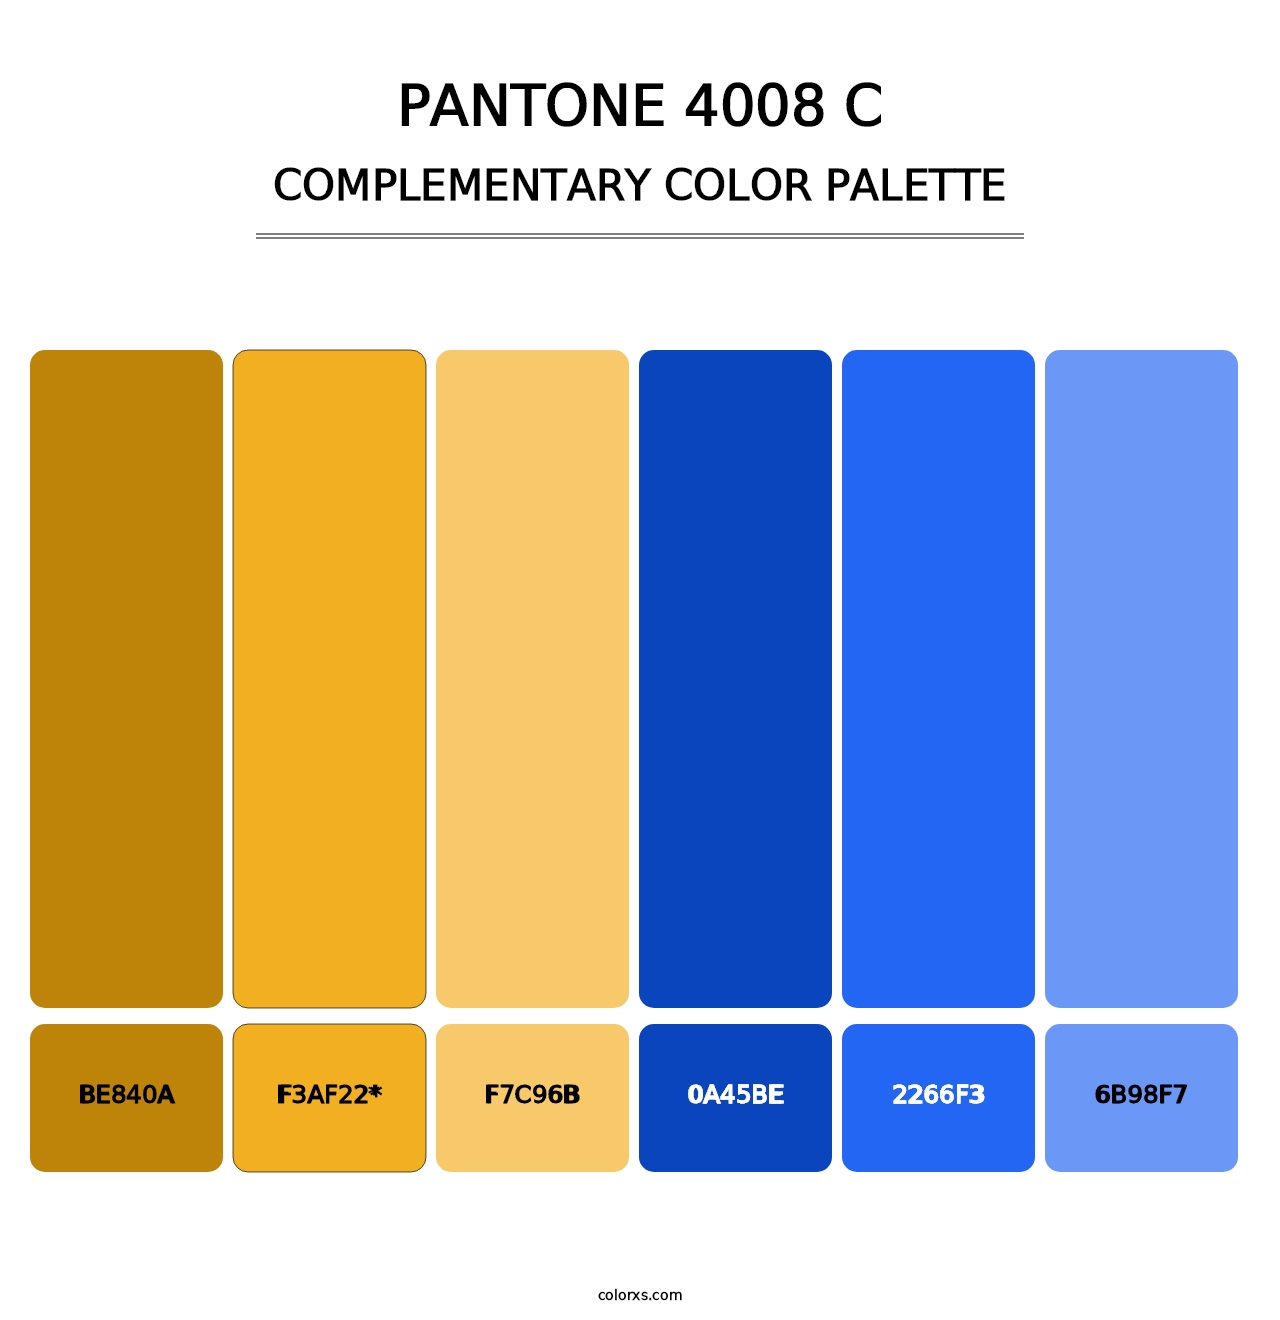 PANTONE 4008 C - Complementary Color Palette